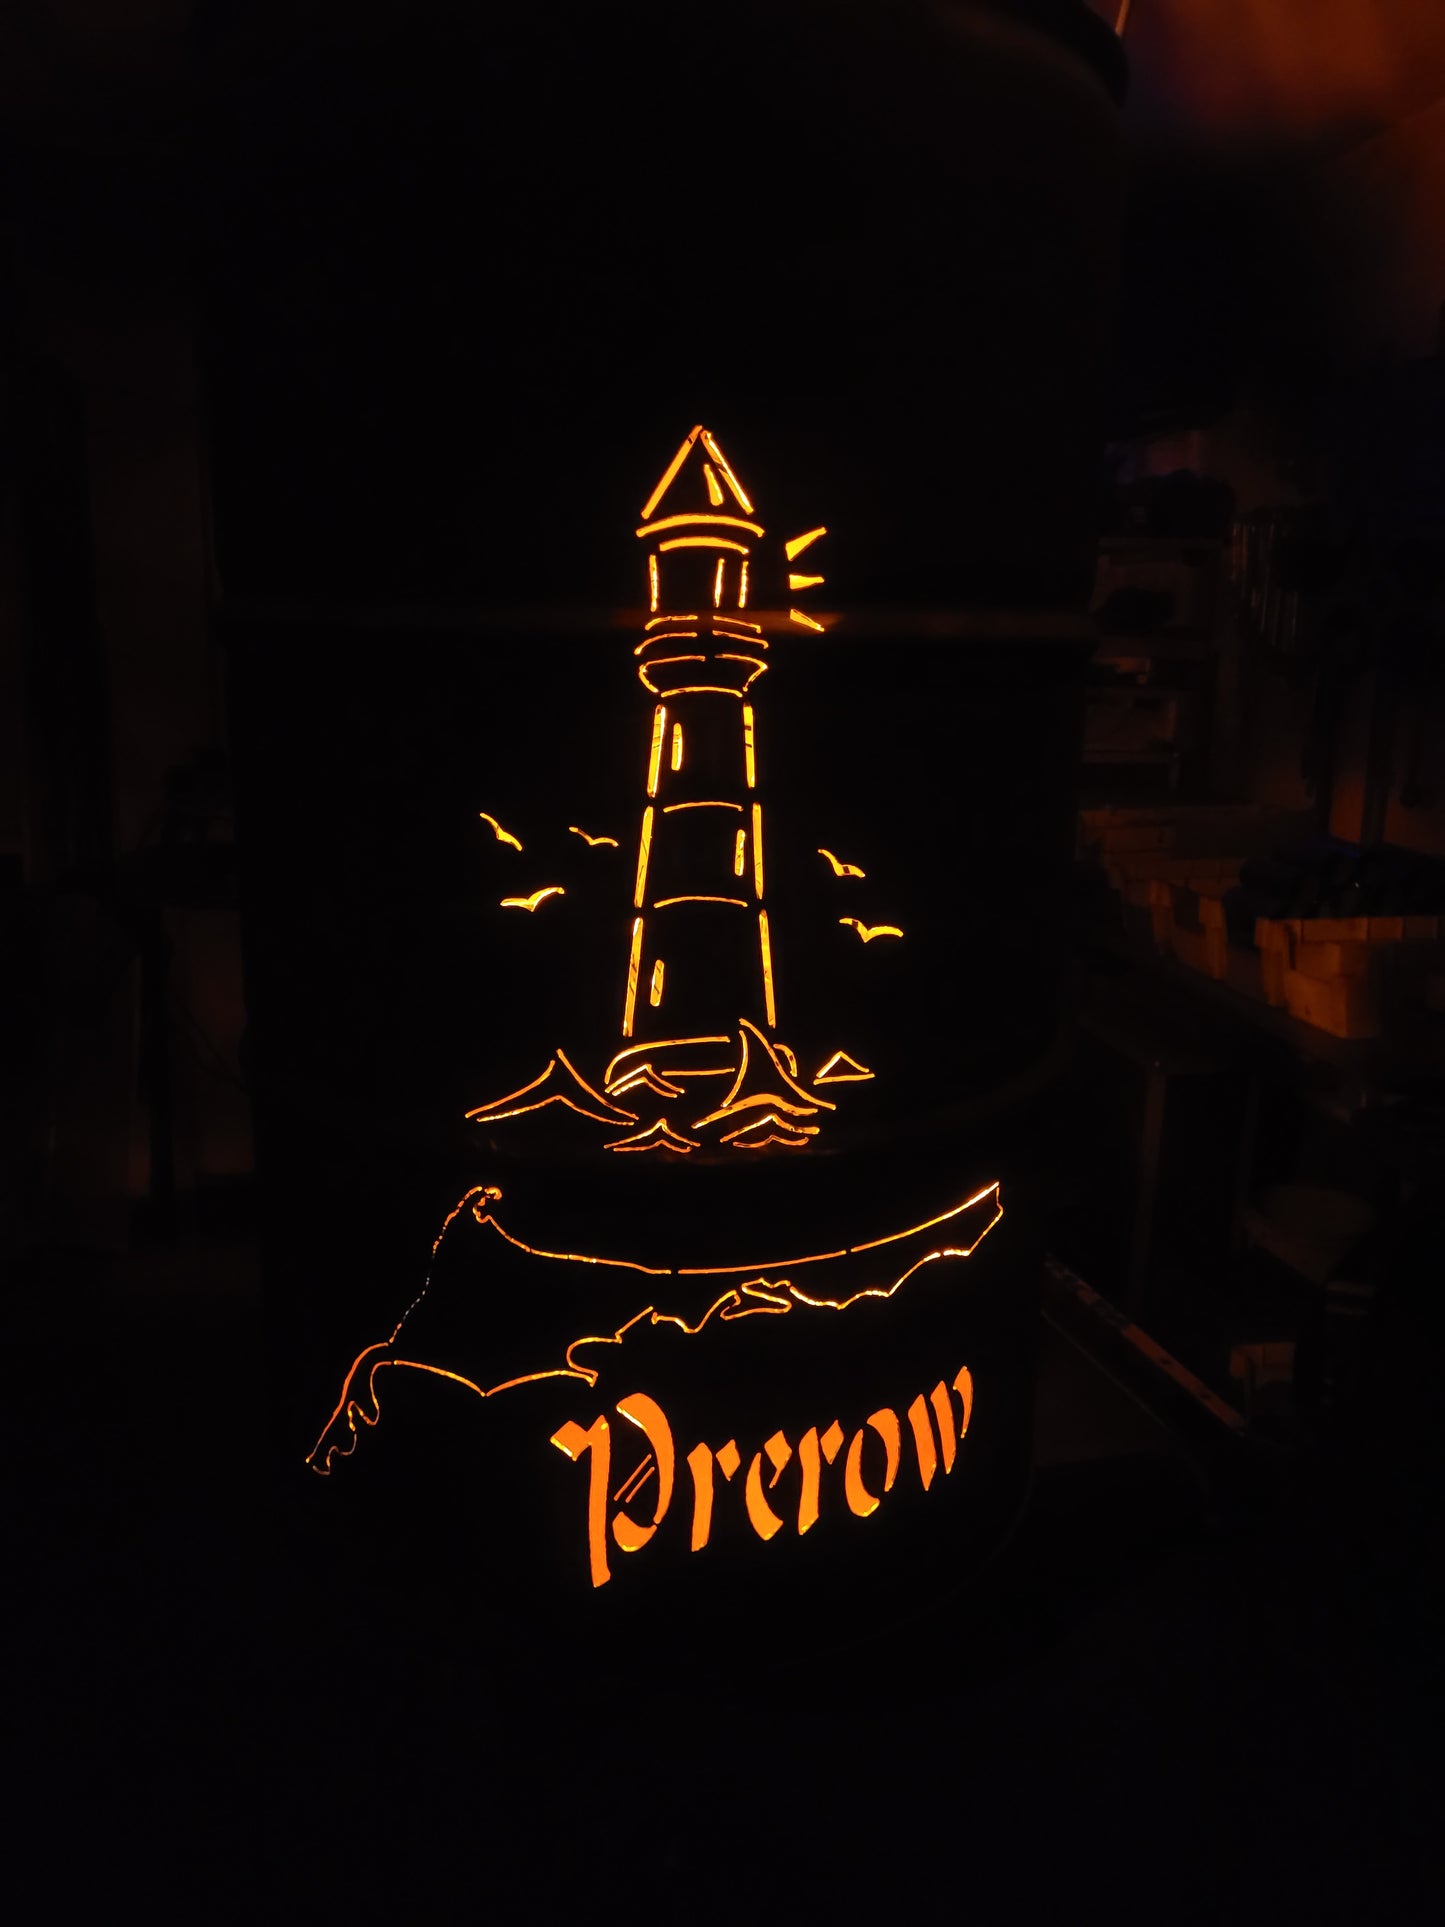 Fire barrel Prerow lighthouse